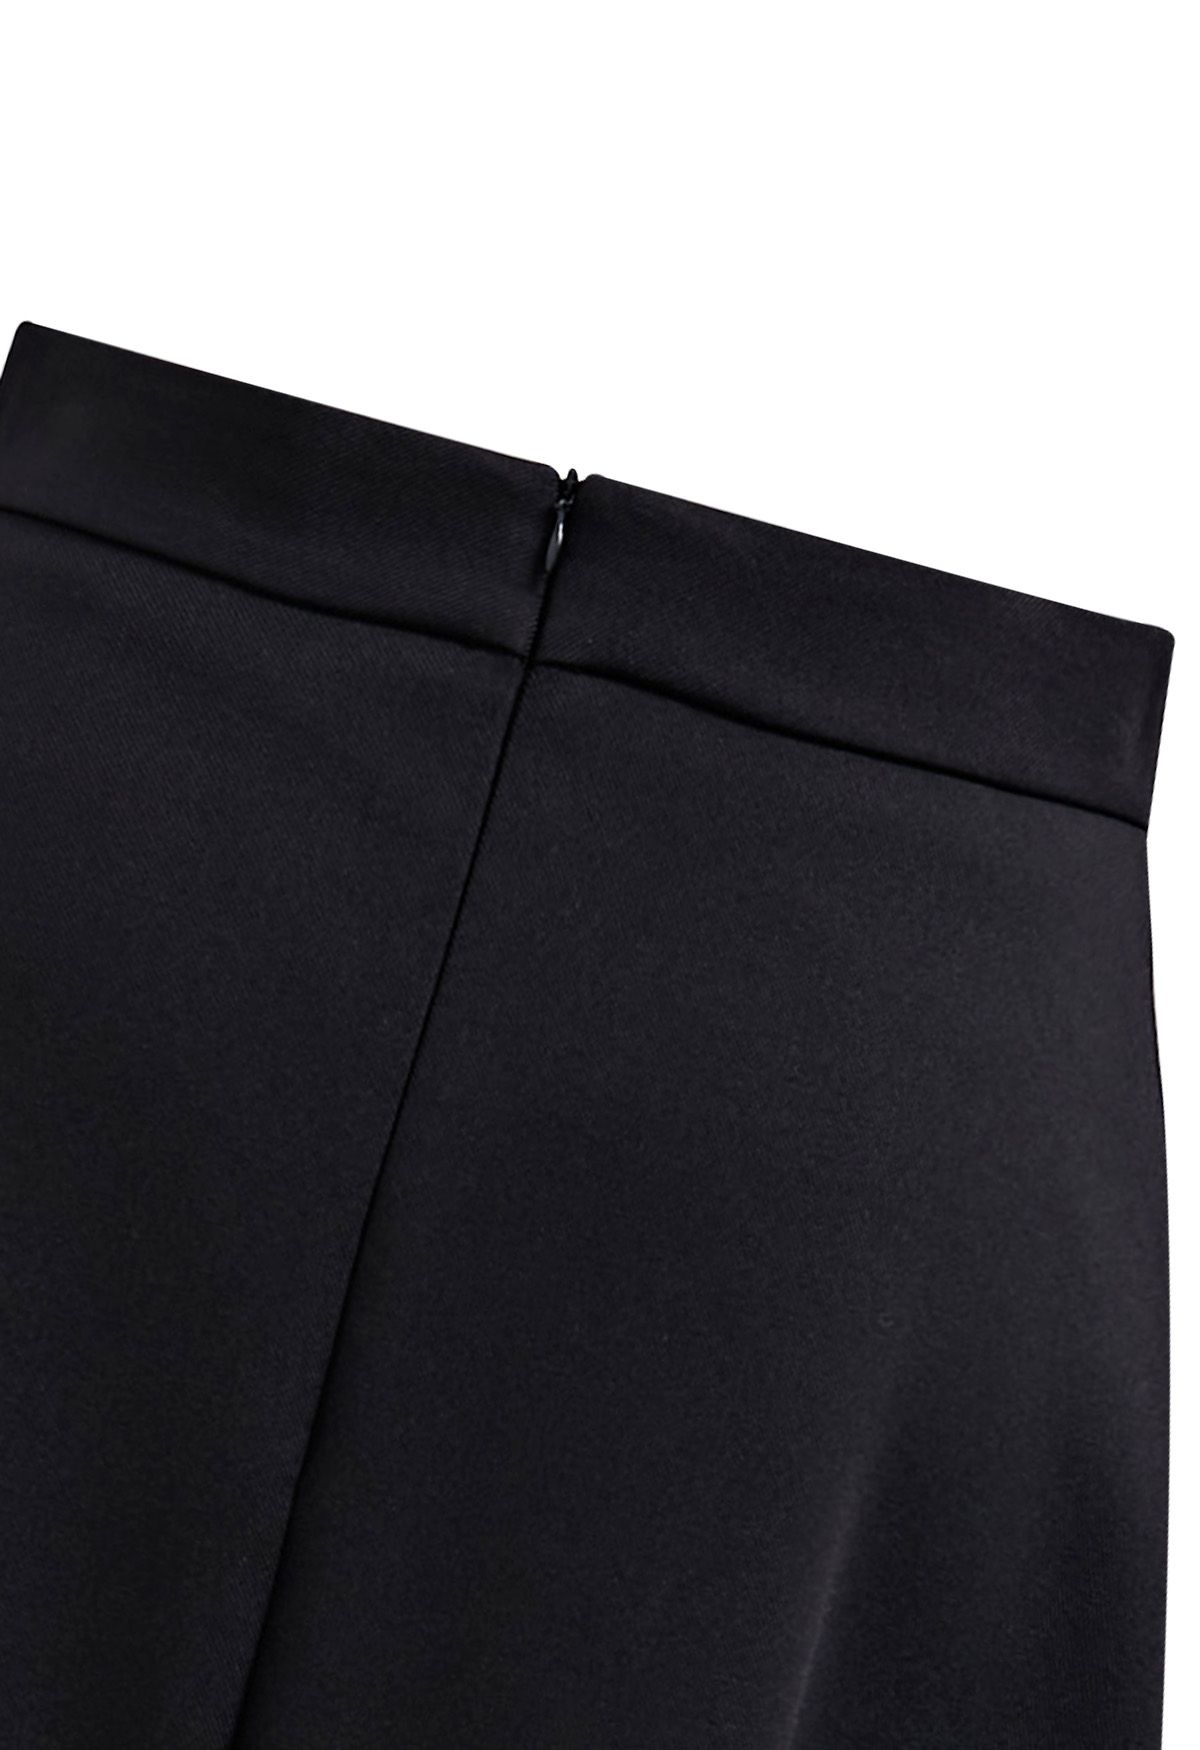 Organza Inserted A-Line Midi Skirt in Black - Retro, Indie and Unique ...